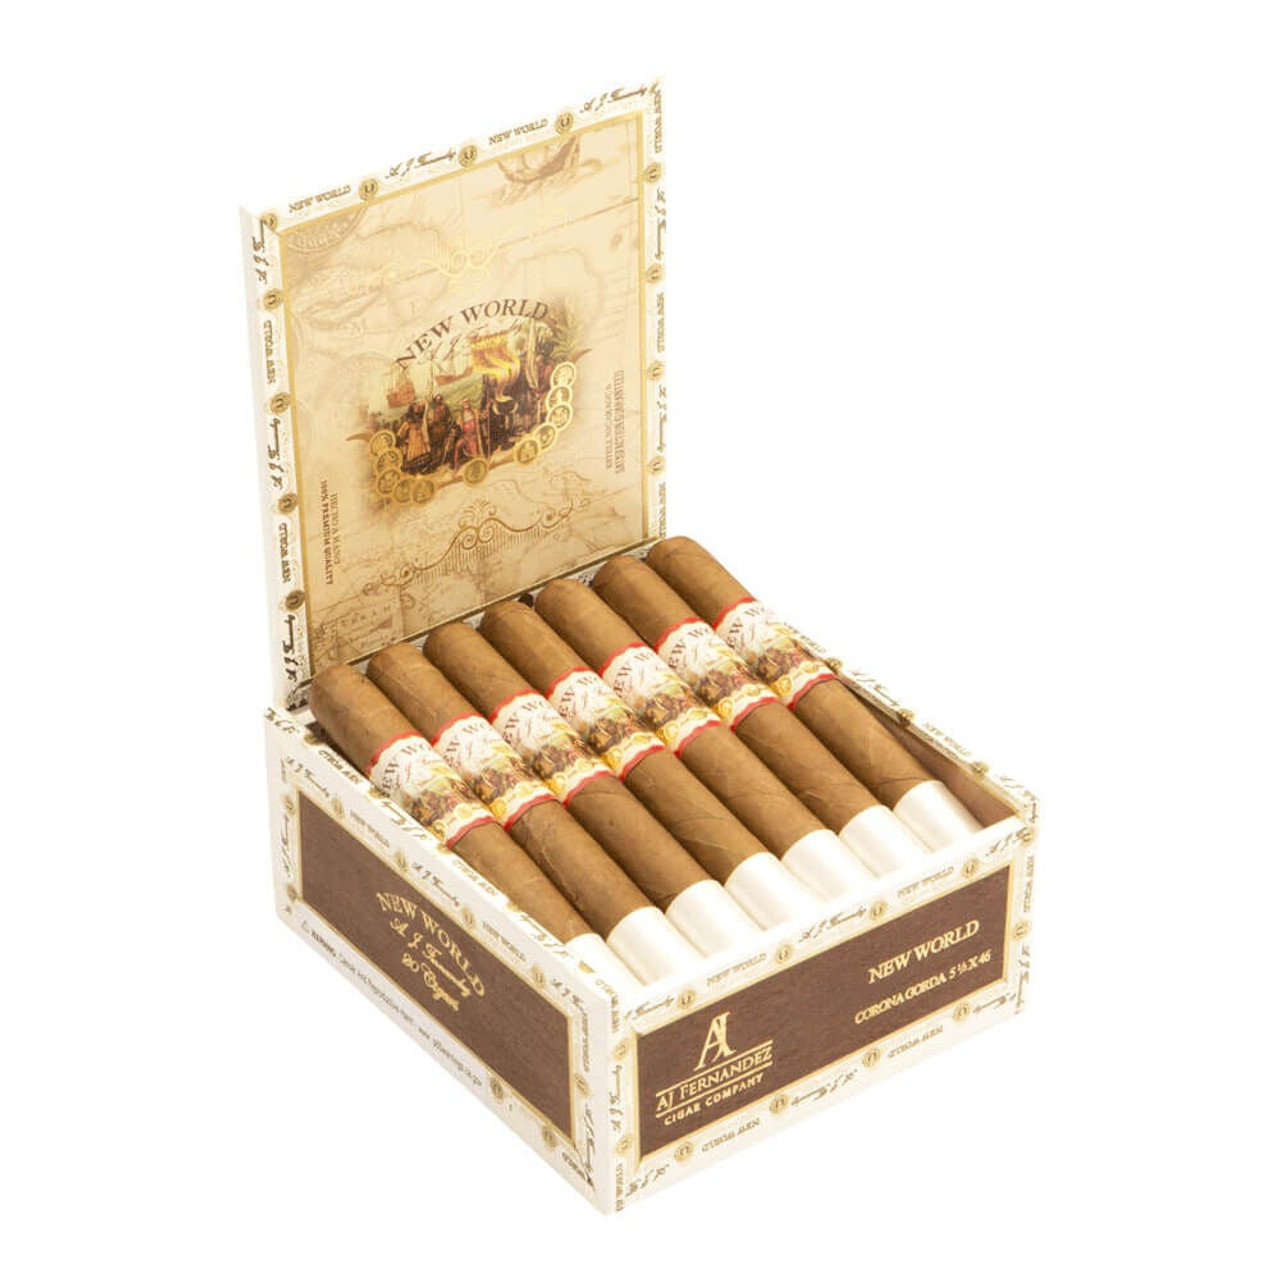 New World Connecticut by AJ Fernandez Corona Gorda Cigars - 5.5 x 46 (Box of 20) Open